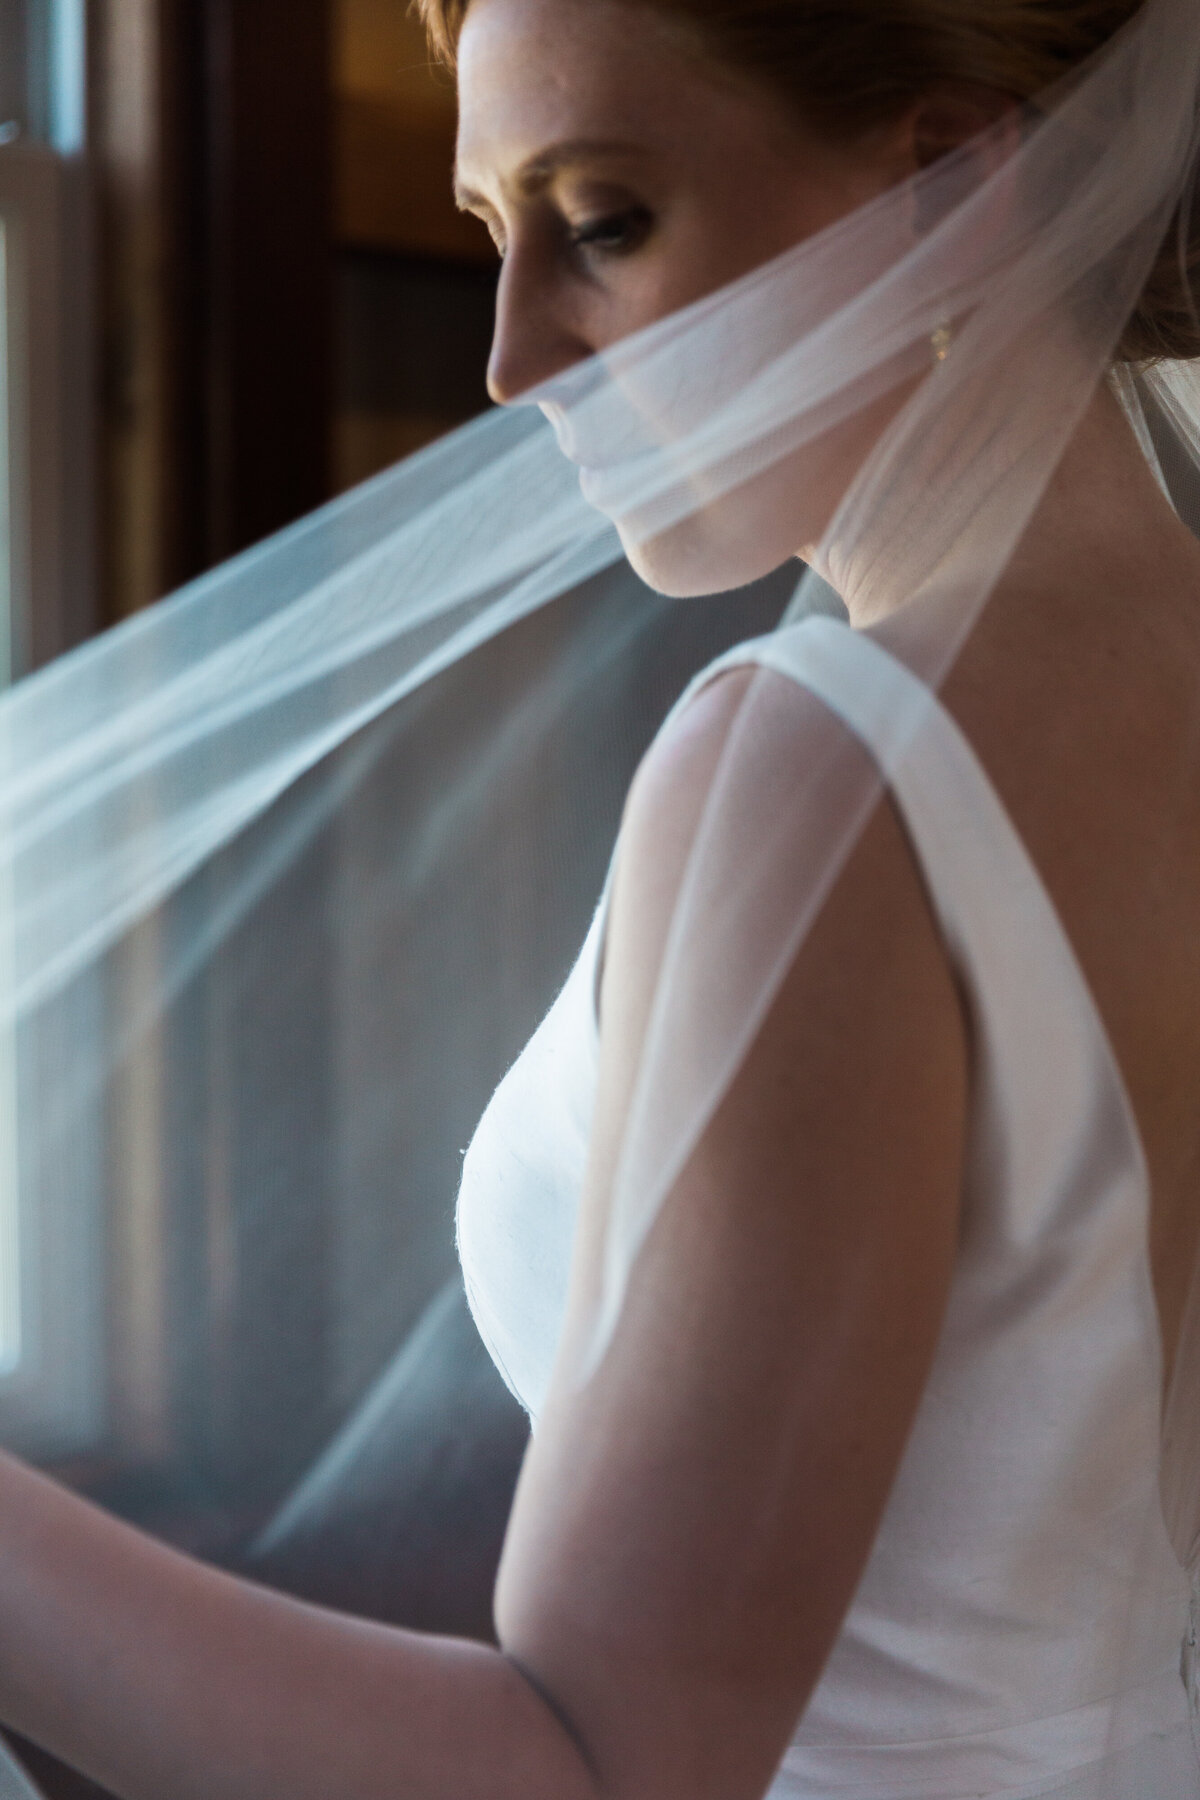 Close-up of bride holding her wedding veil